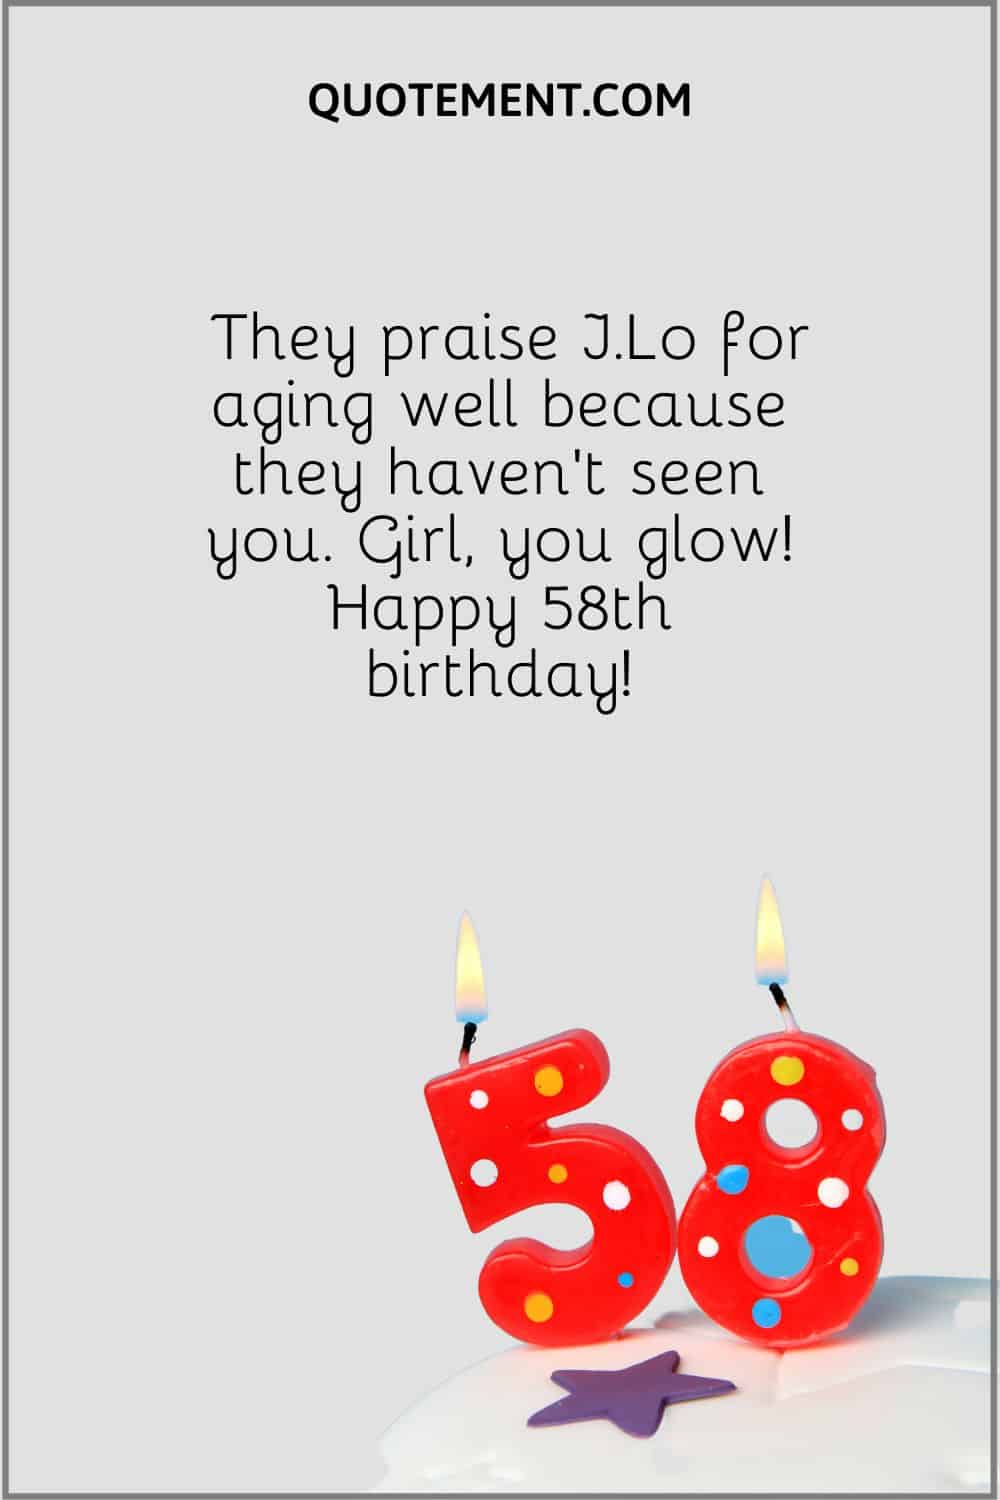 birthday candles image representing happy 58th birthday wish